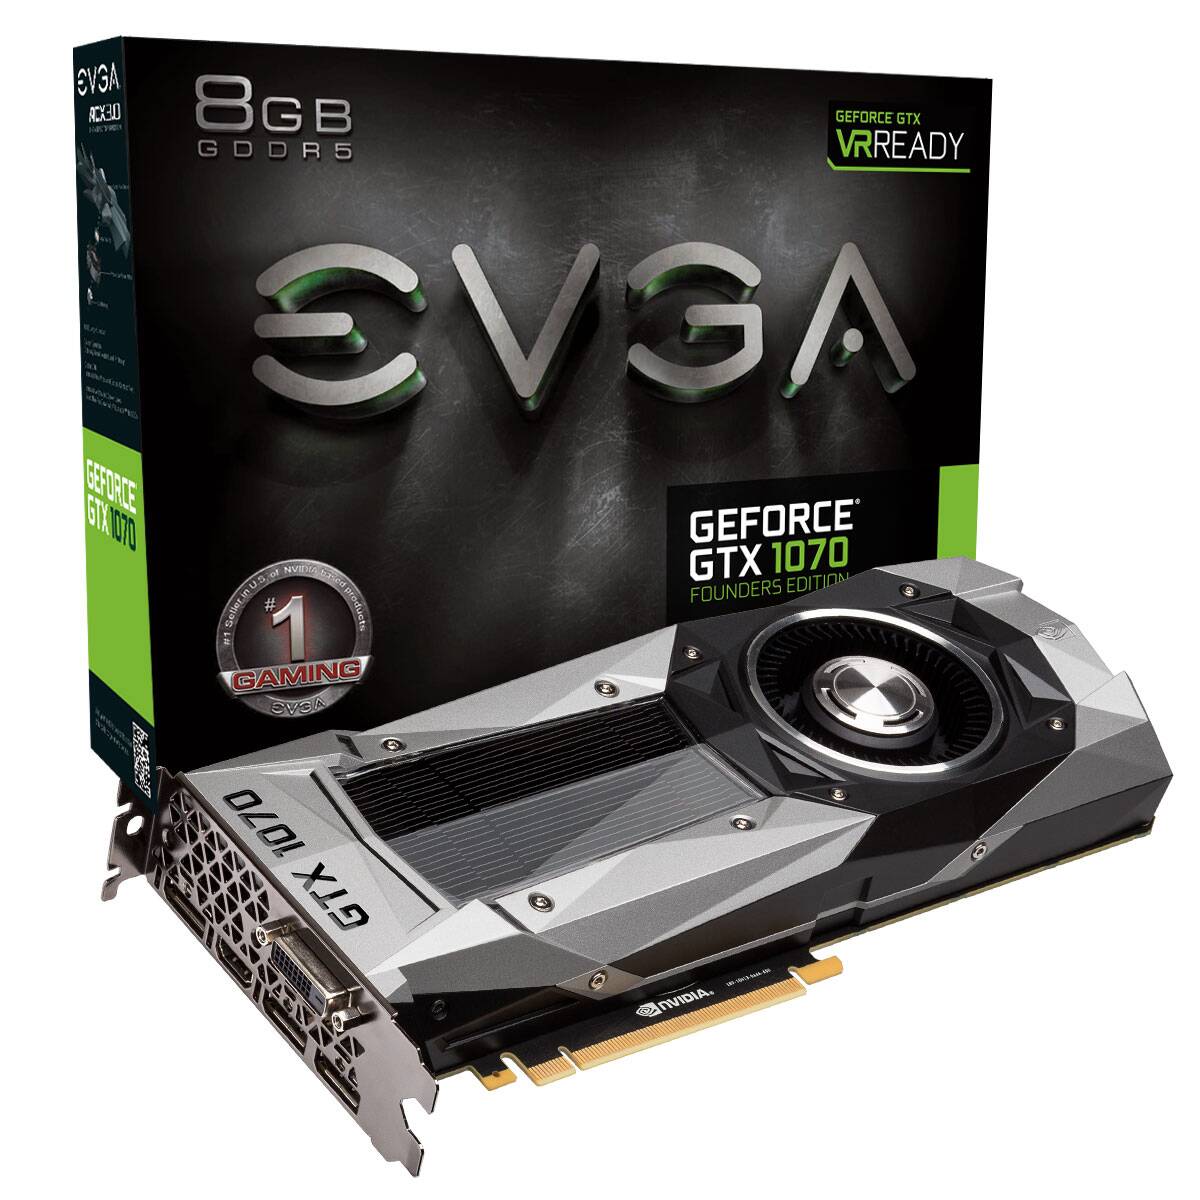 EVGA - JP - EVGA GeForce GTX FOUNDERS EDITION, 08G-P4-6170-KR, 8GB GDDR5 - 08G-P4-6170-KR